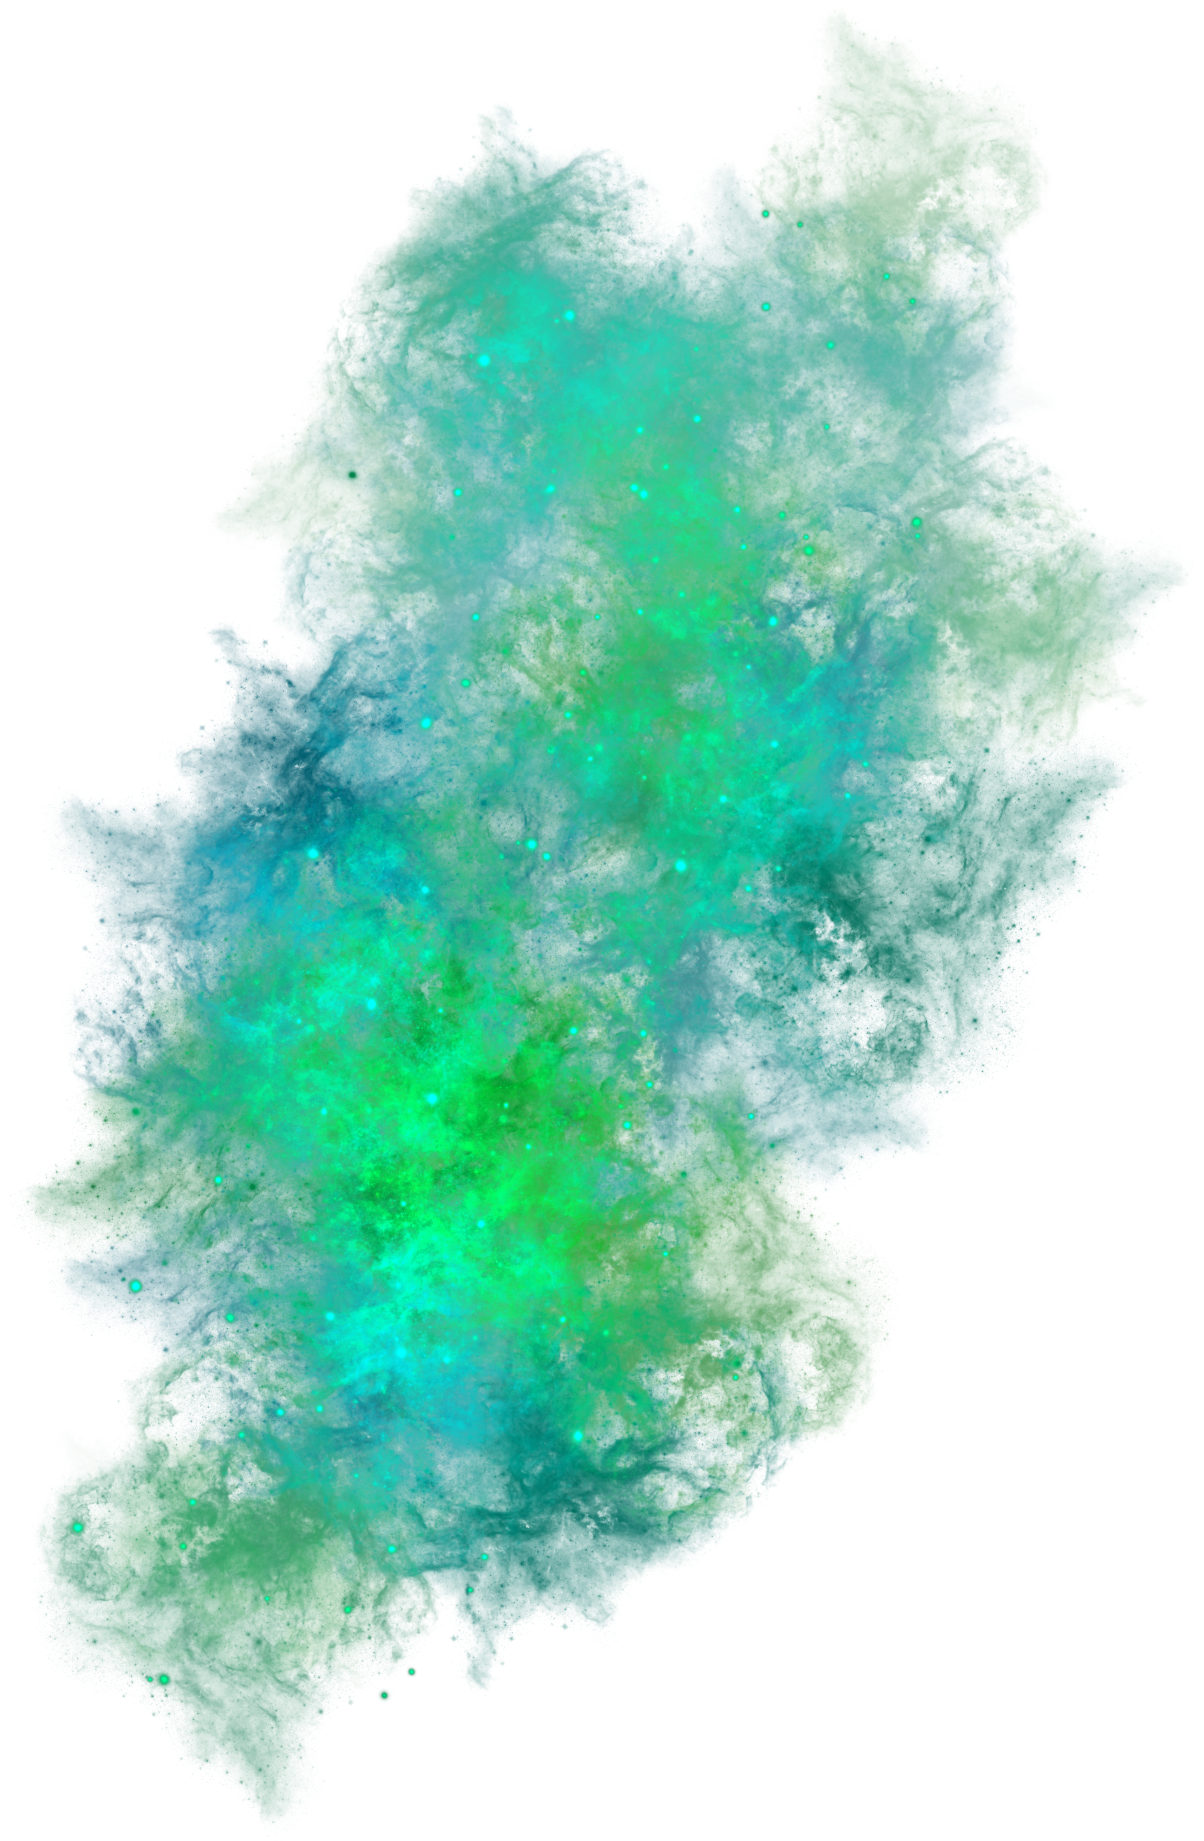 Space Galaxy Overlay